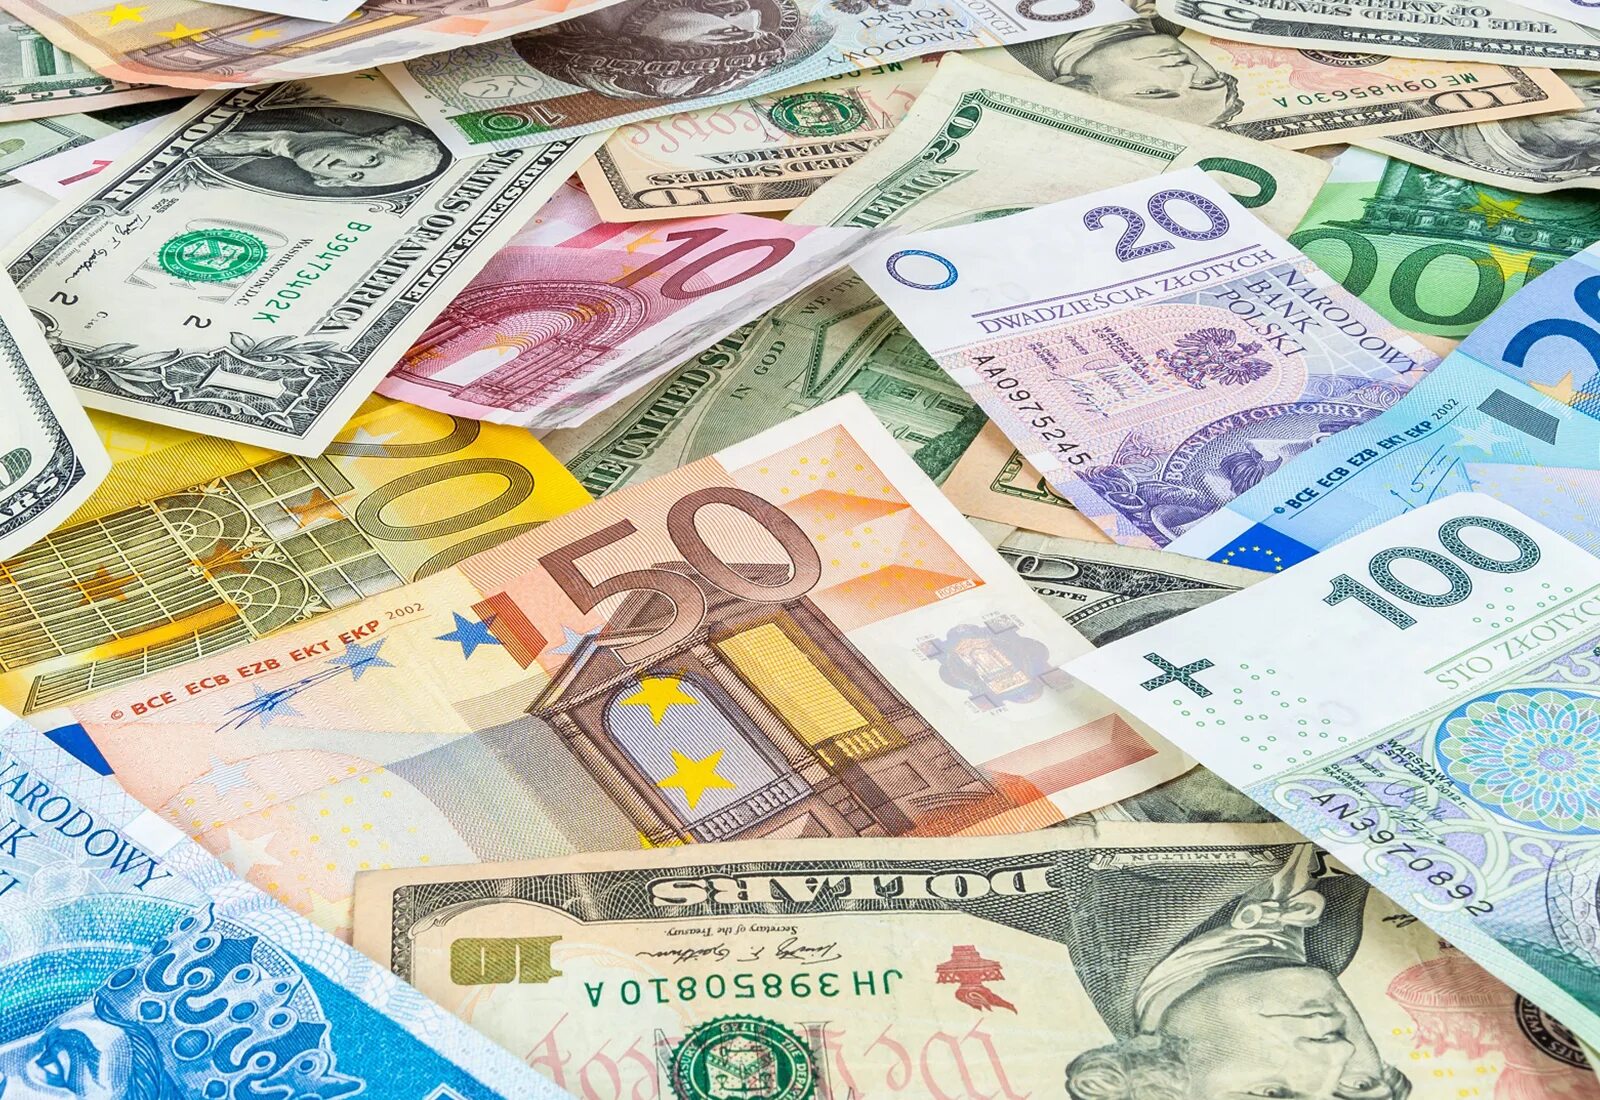 Currency prices. Иностранная валюта. Доллар и евро. Евро валюта. Иностранная валюта евро.